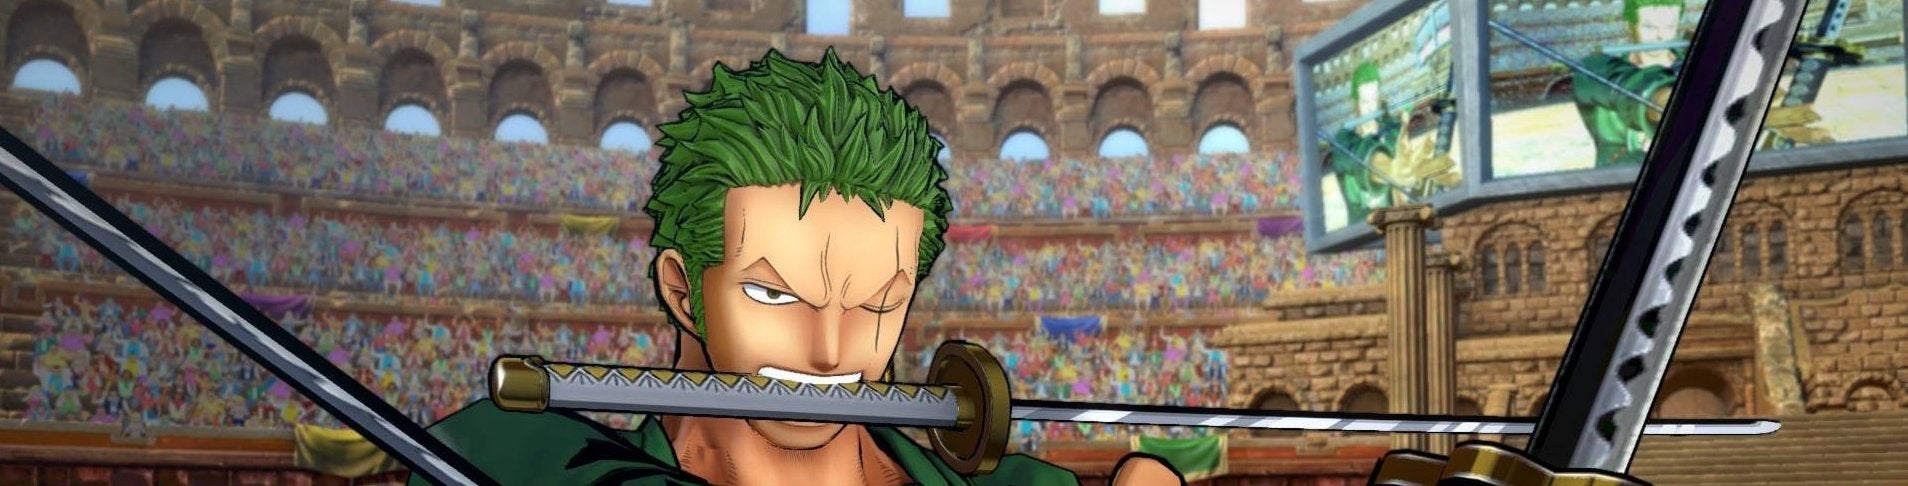 Imagem para One Piece Burning Blood - Gameplay 1080p PS4